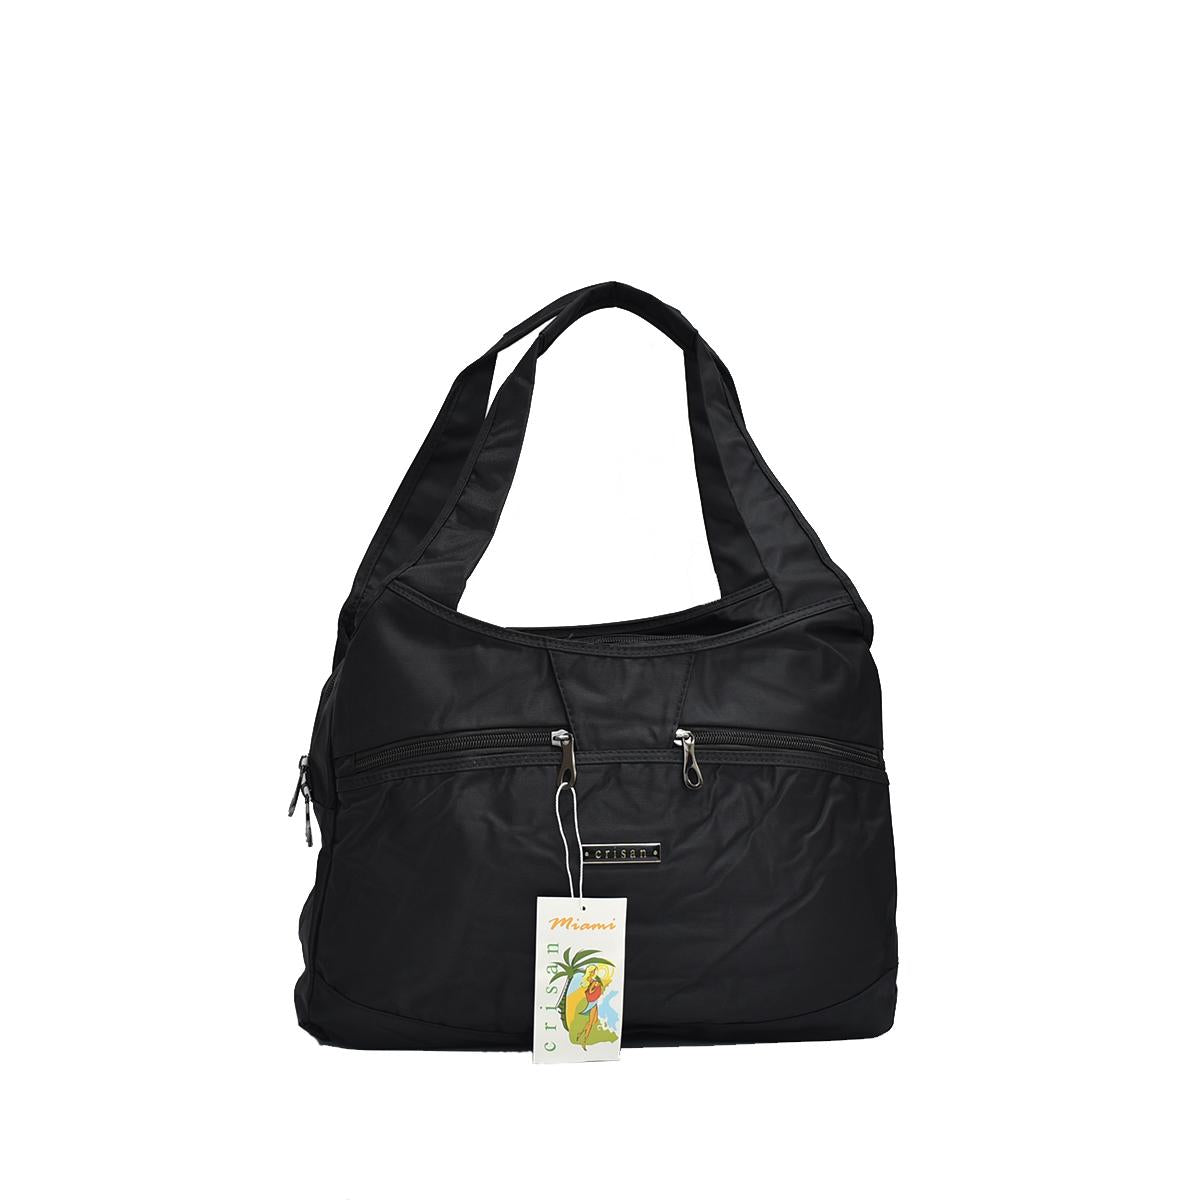 Crisan Bags - Camilia - Handbag-Crisan bags